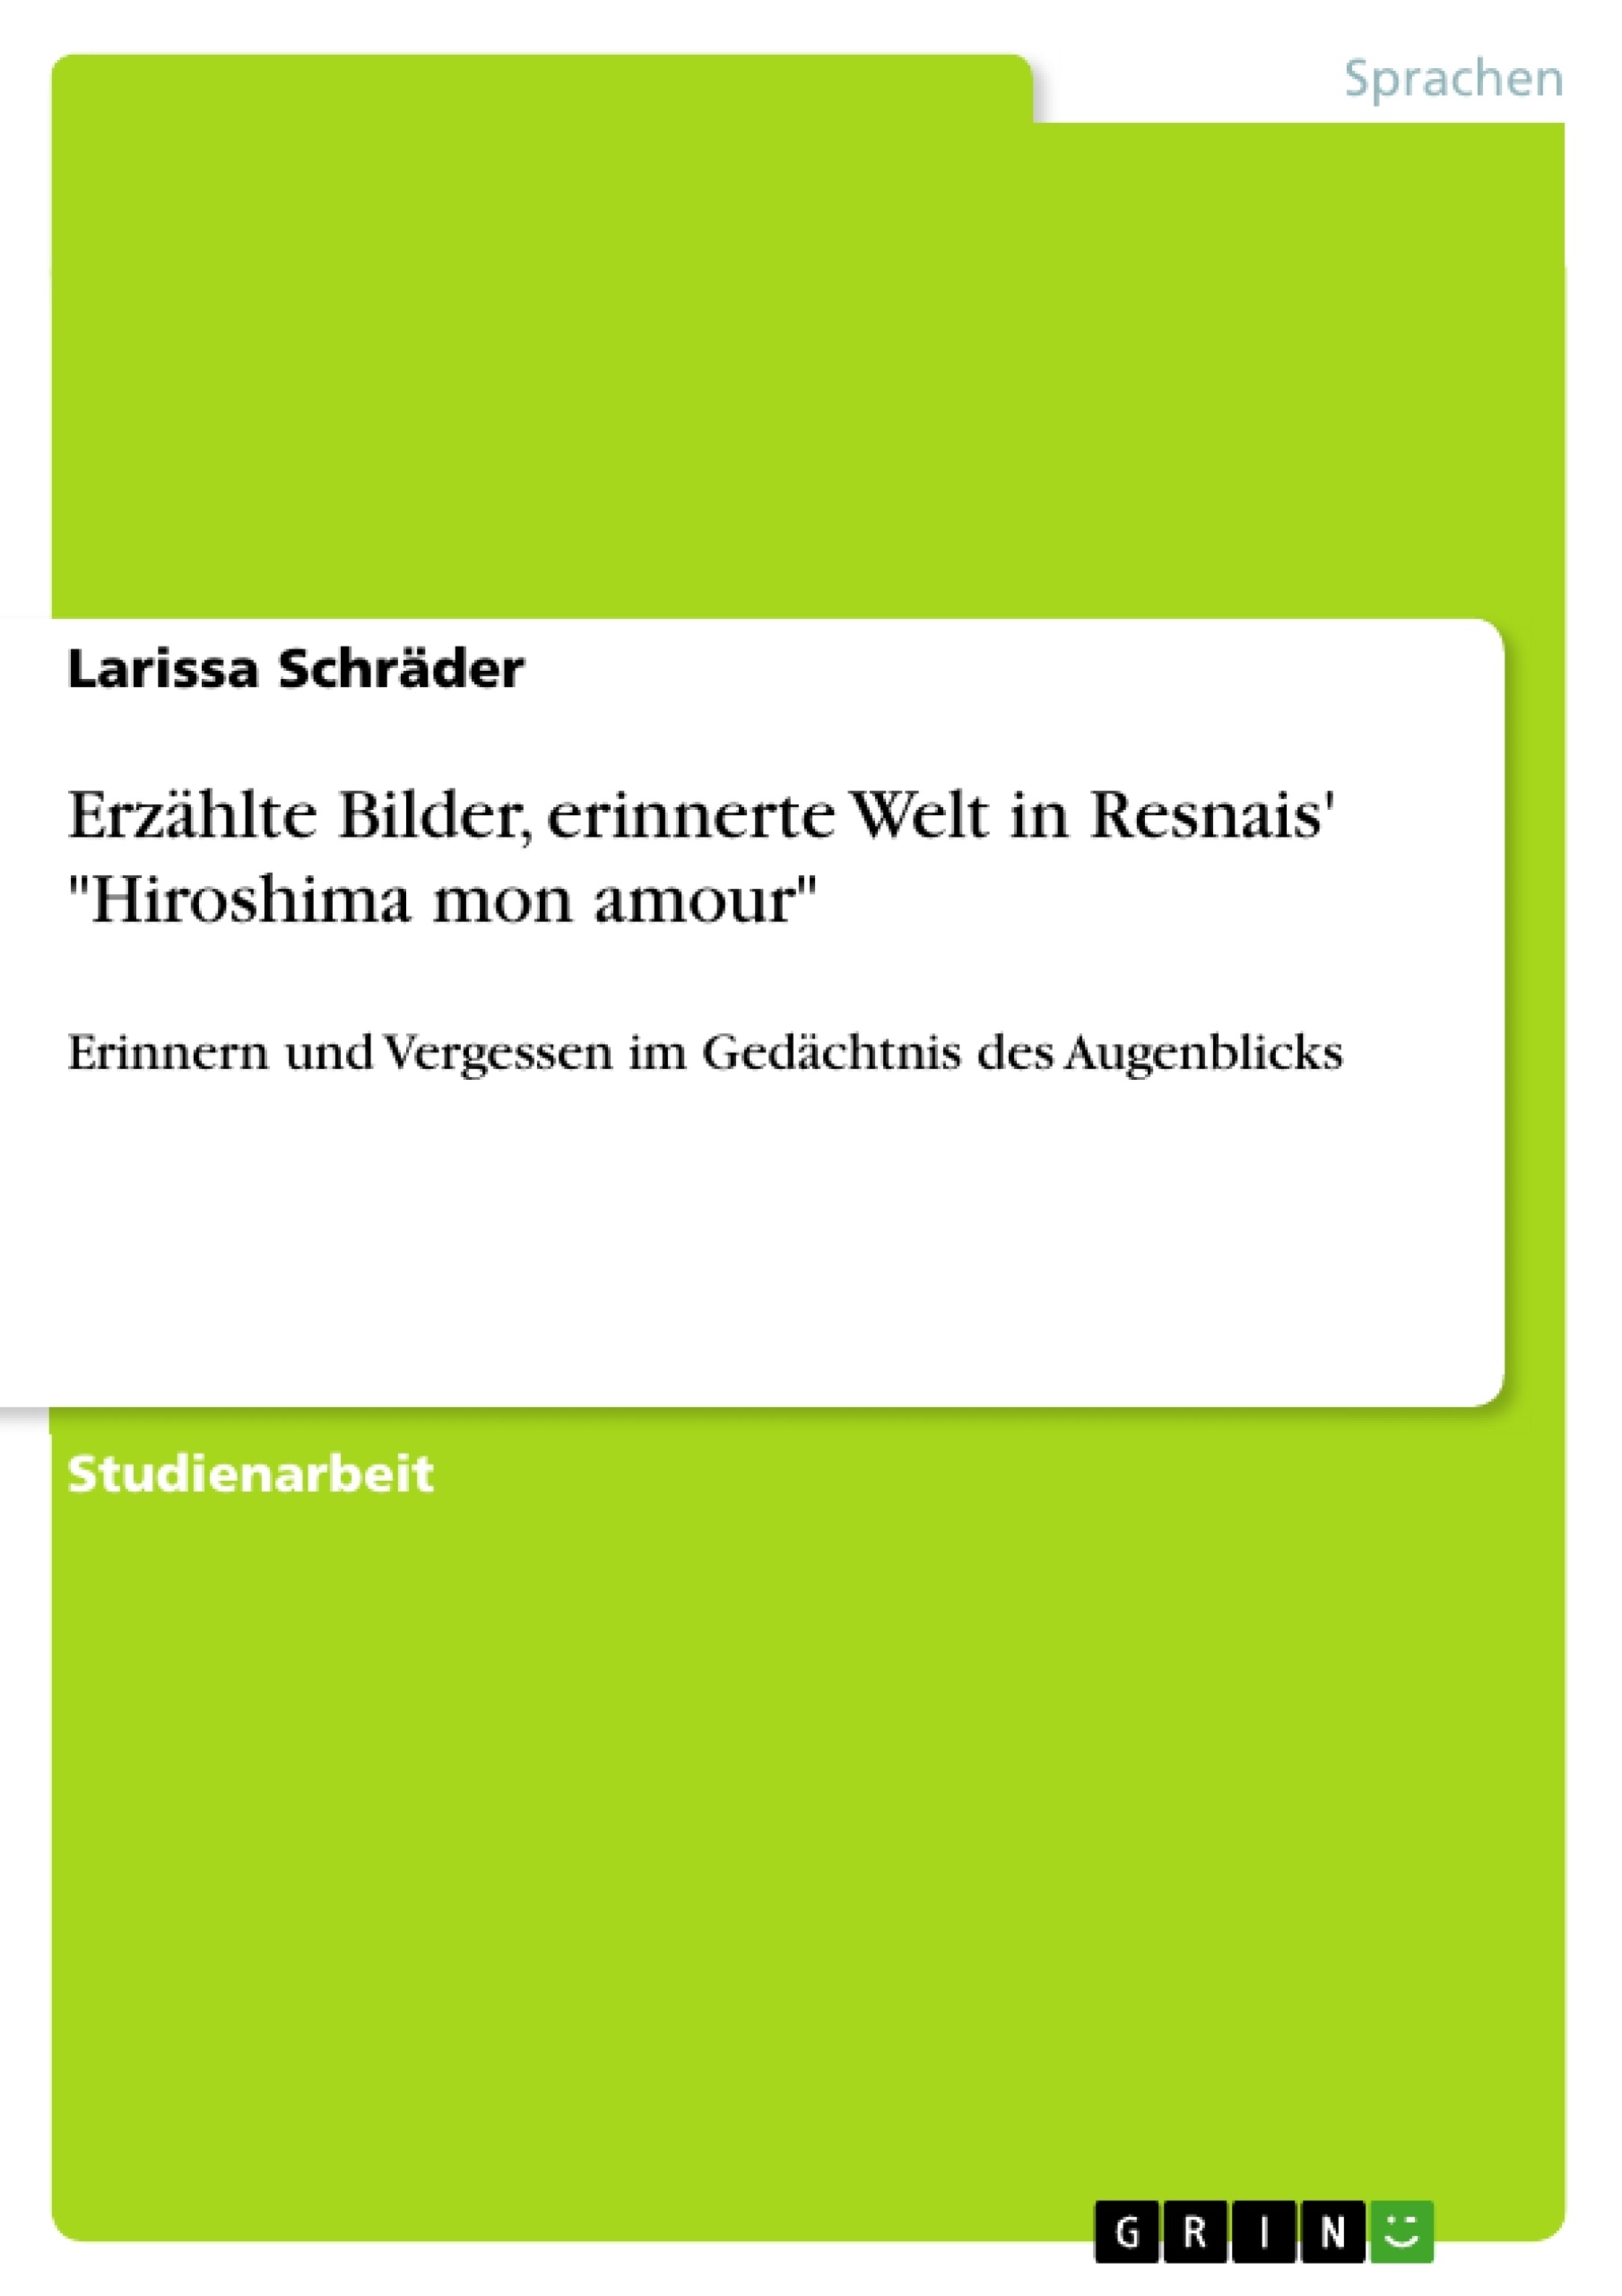 Titre: Erzählte Bilder, erinnerte Welt in Resnais' "Hiroshima mon amour"